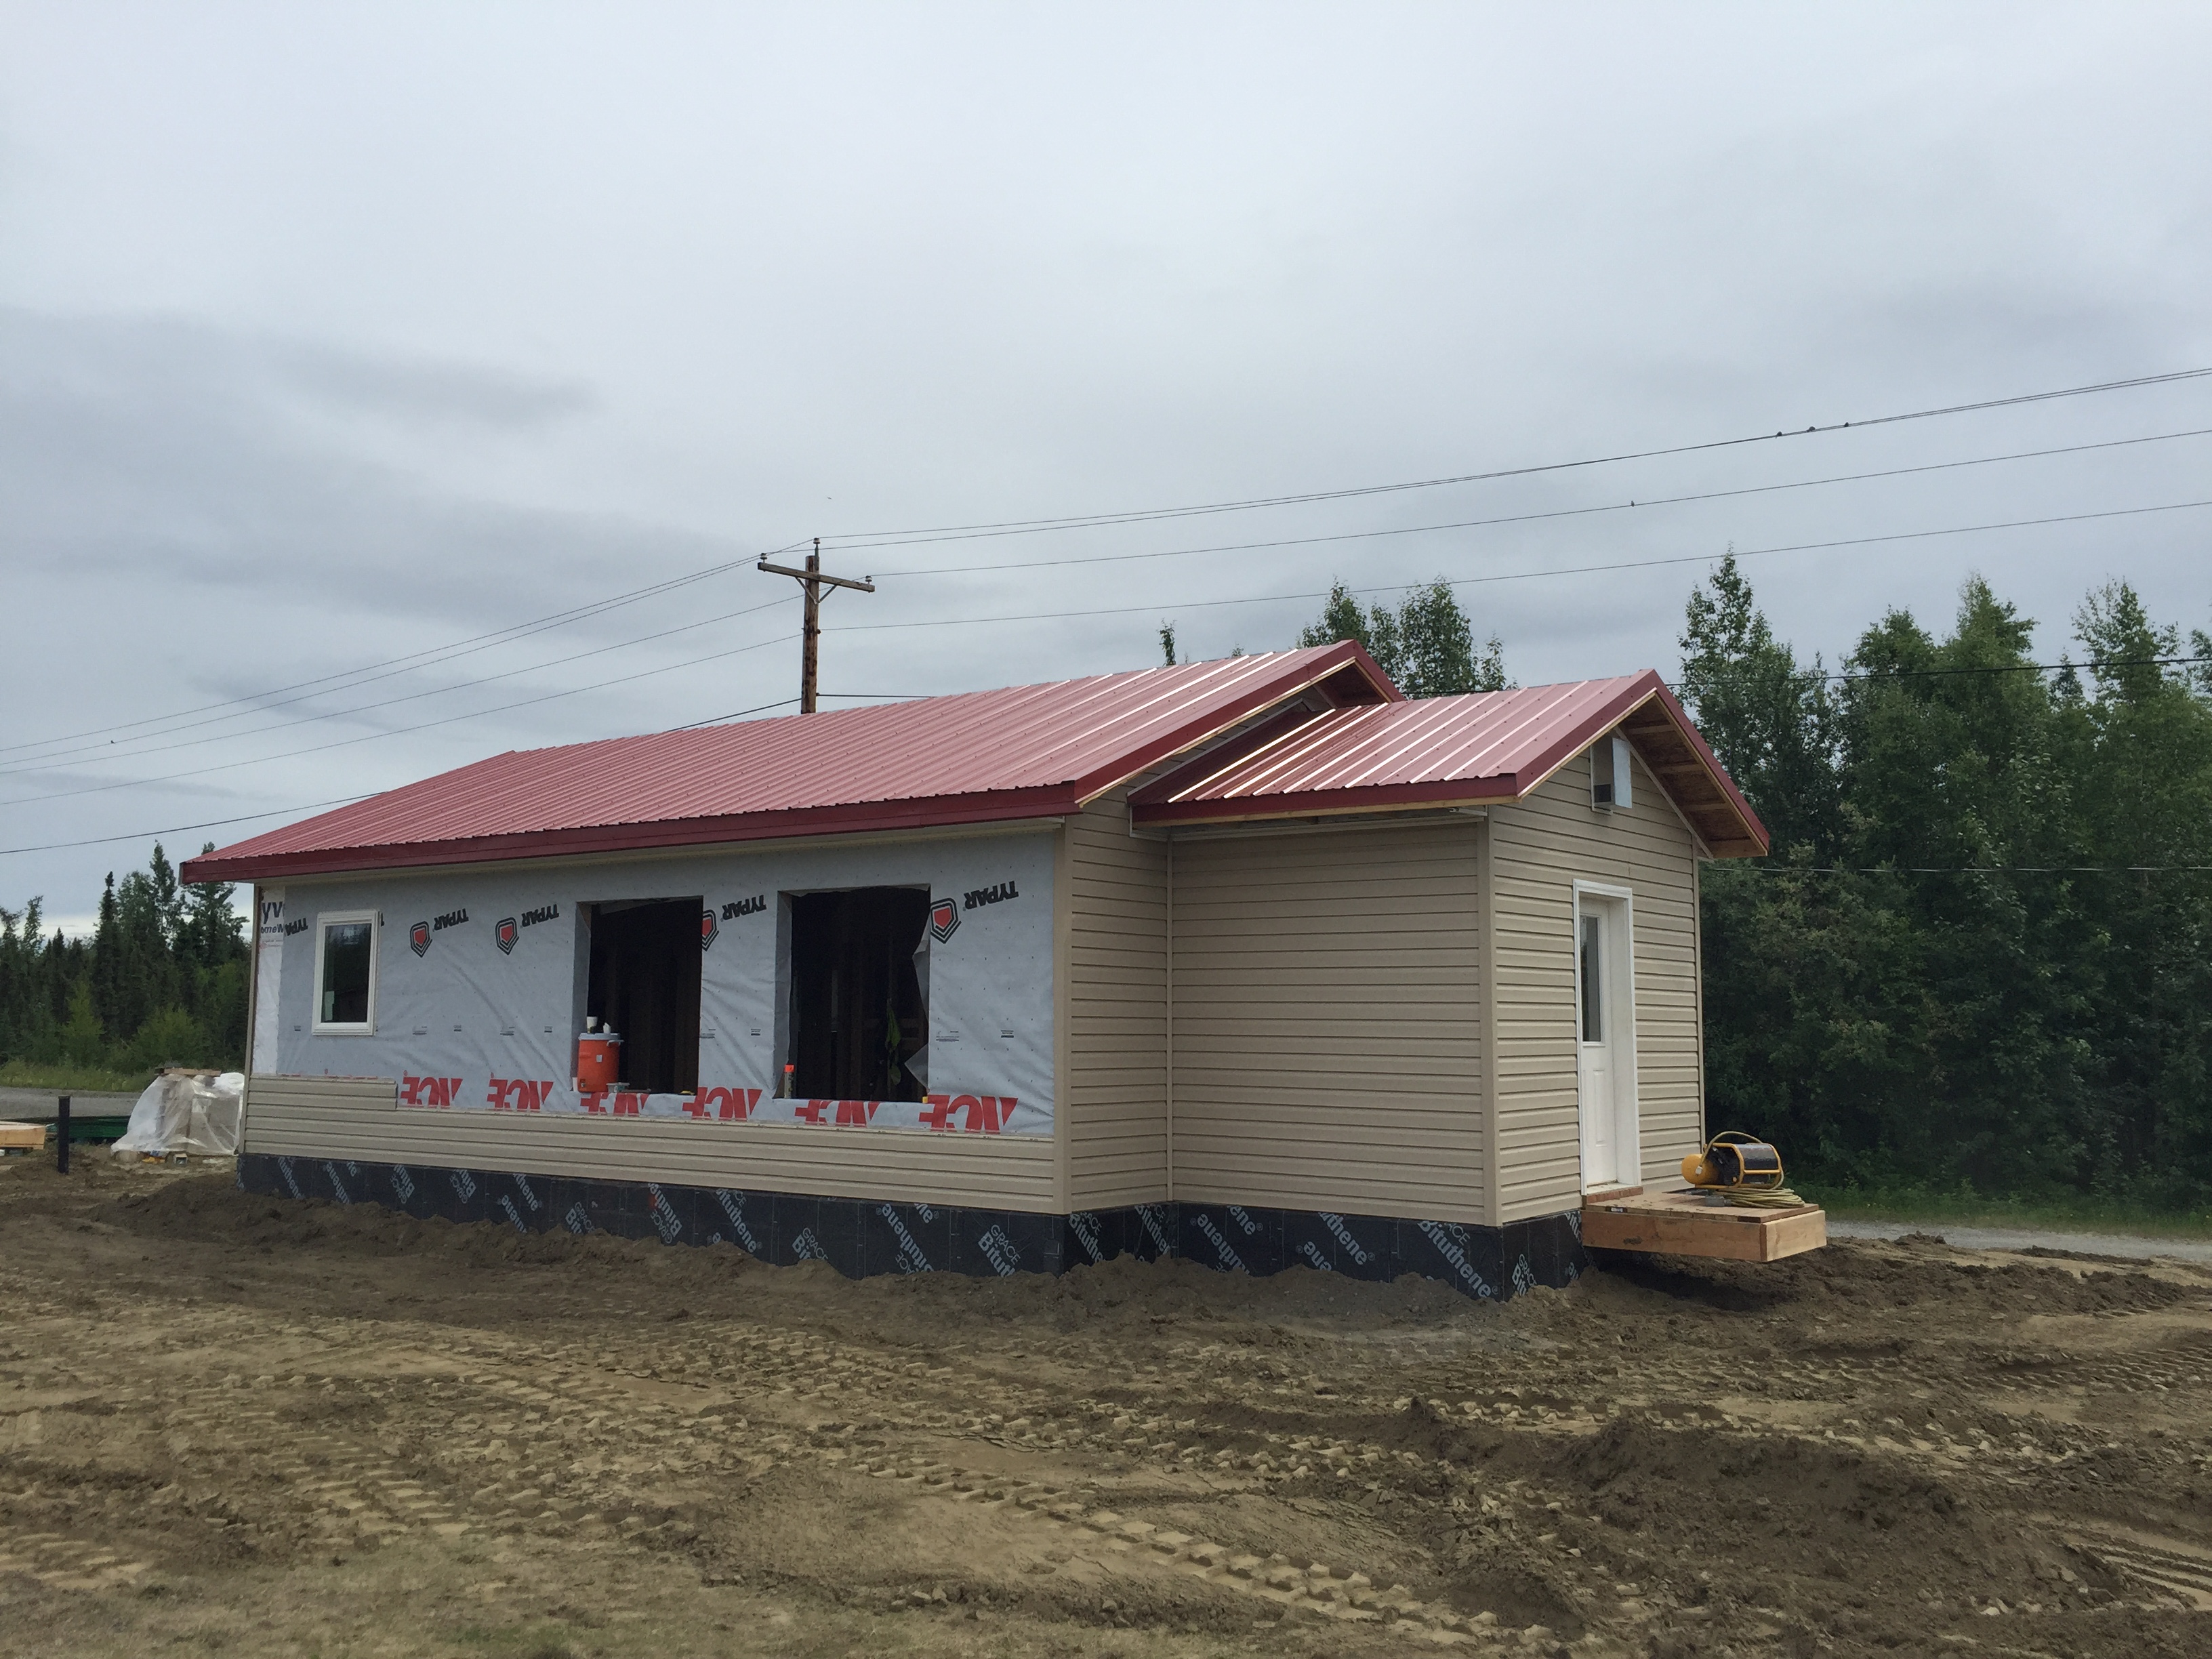 New teacher housing being built by high school students in Nikolai, Alaska in June. (Photo by Anne Hillman/Alaska Public Media)